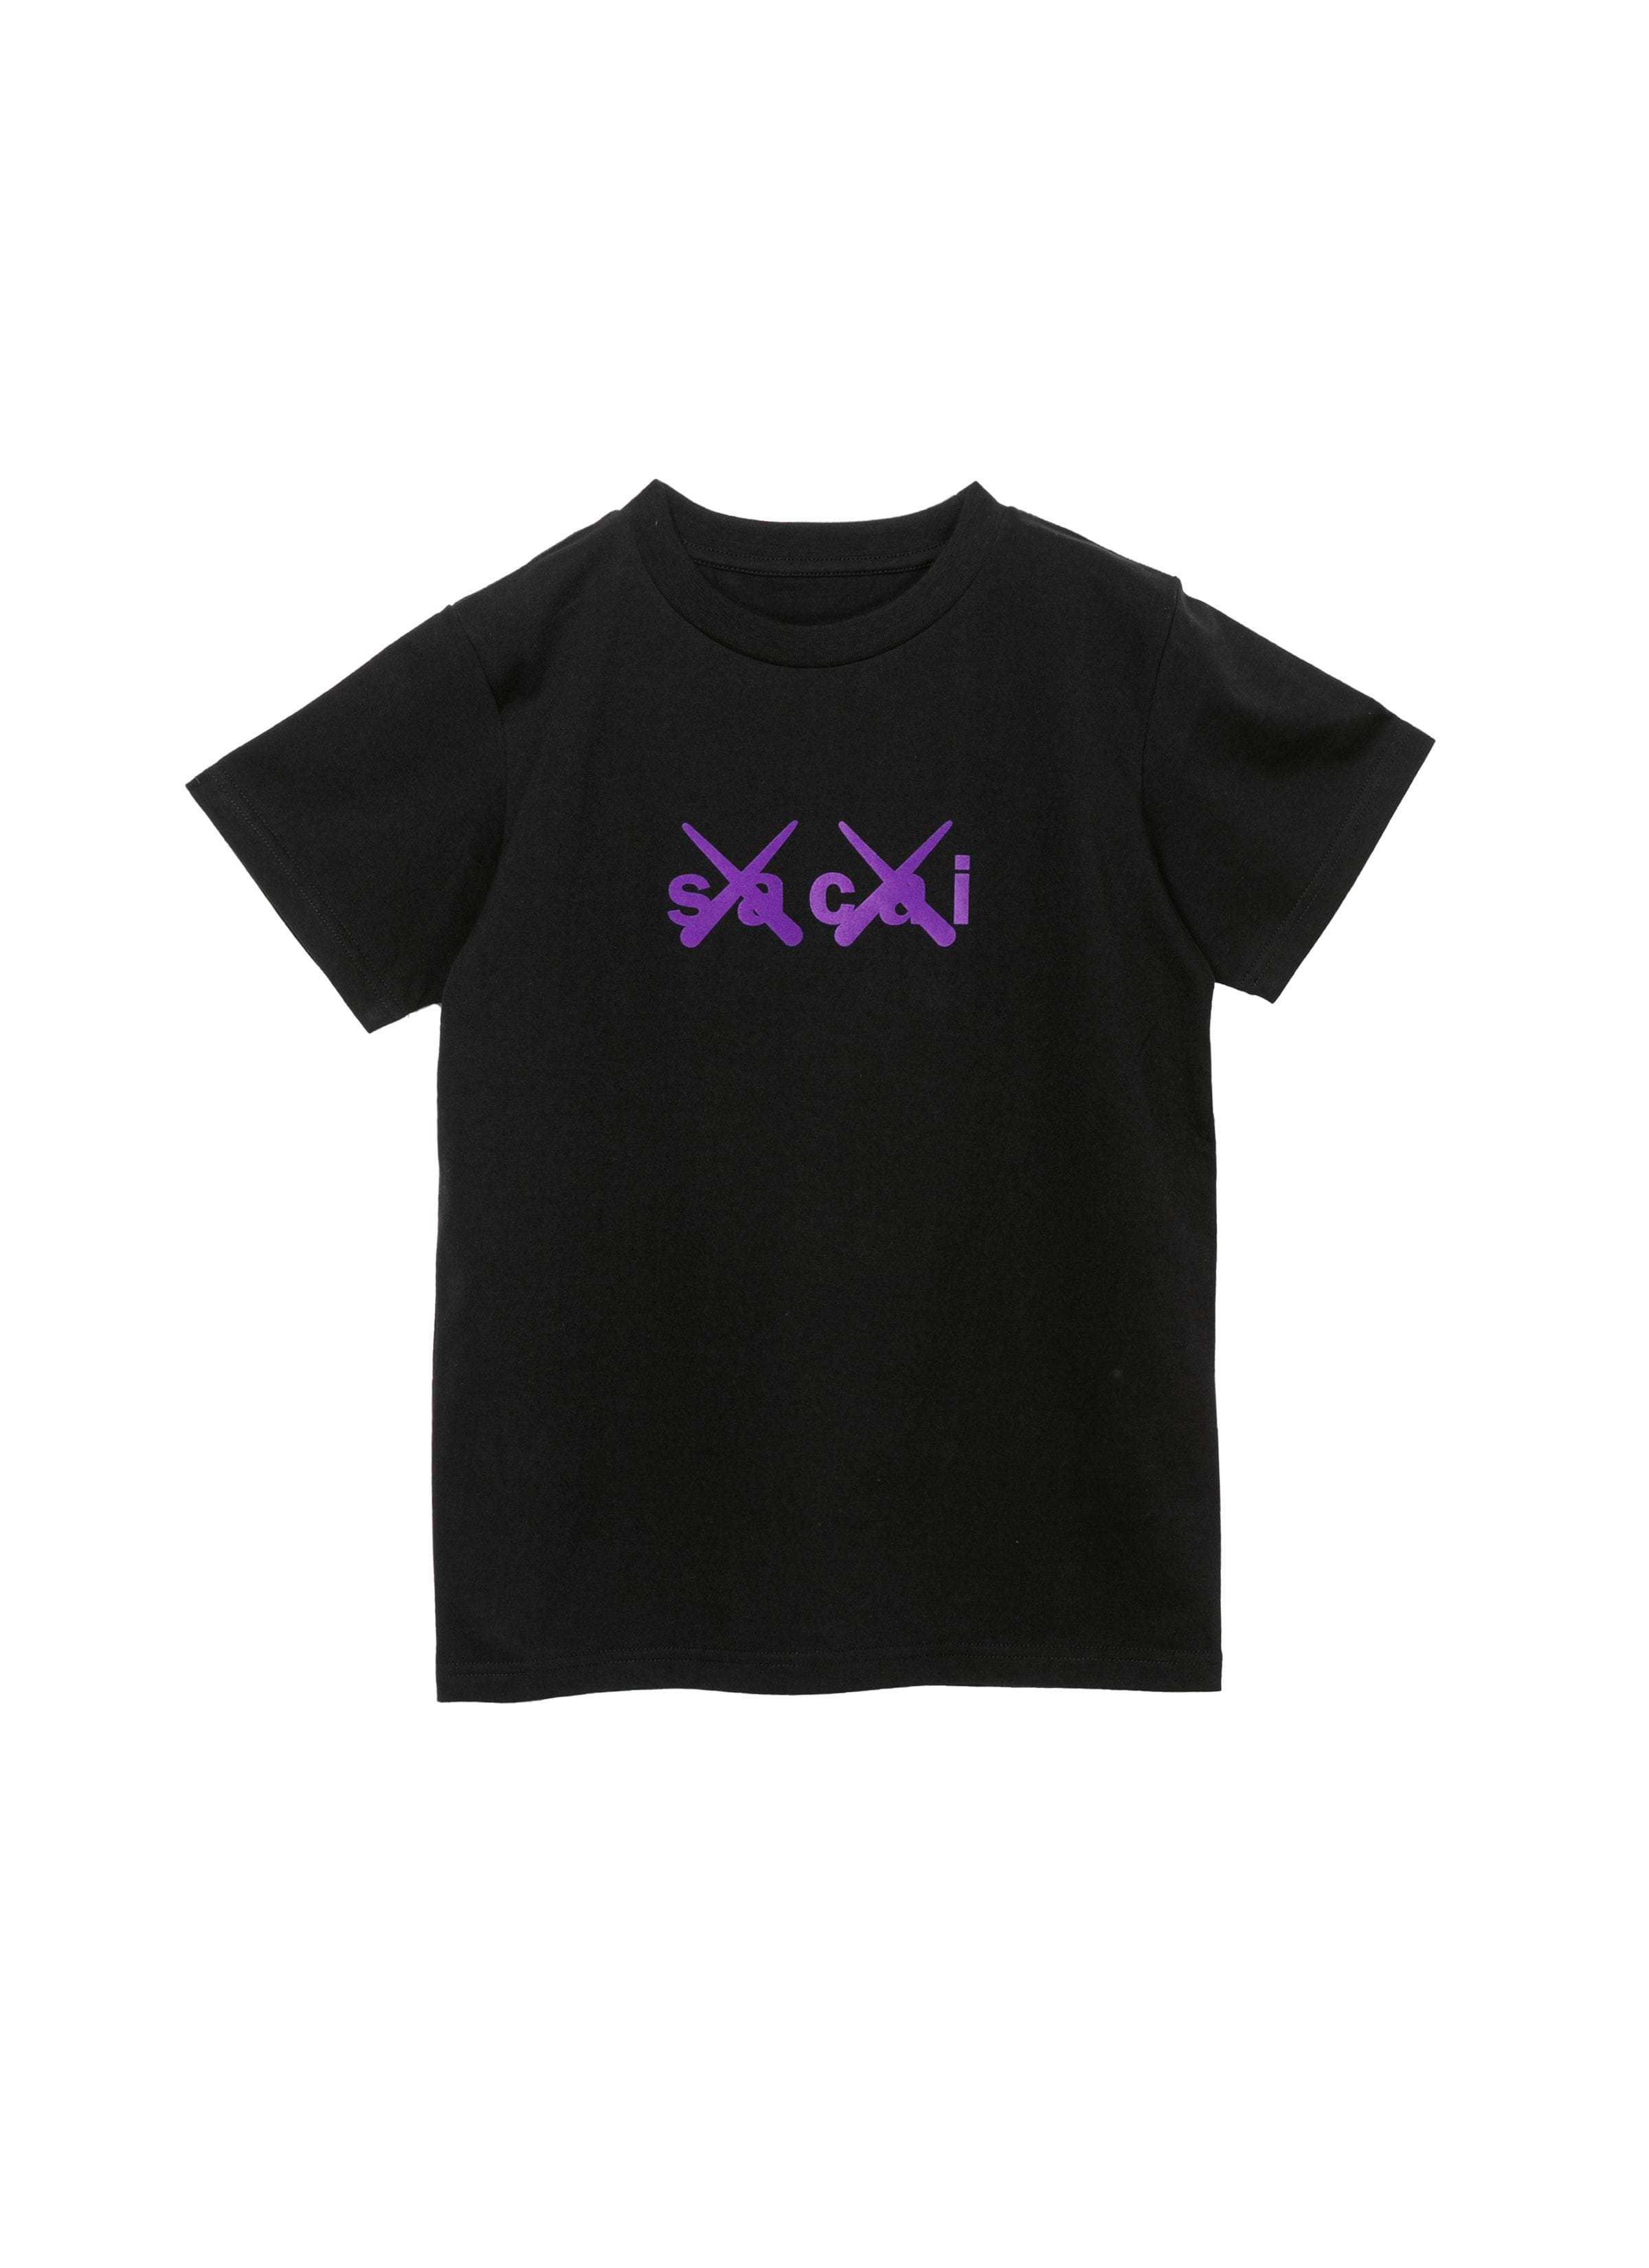 sacai x KAWS / Flock Print T-Shirt 詳細画像 BLACK×PURPLE 4